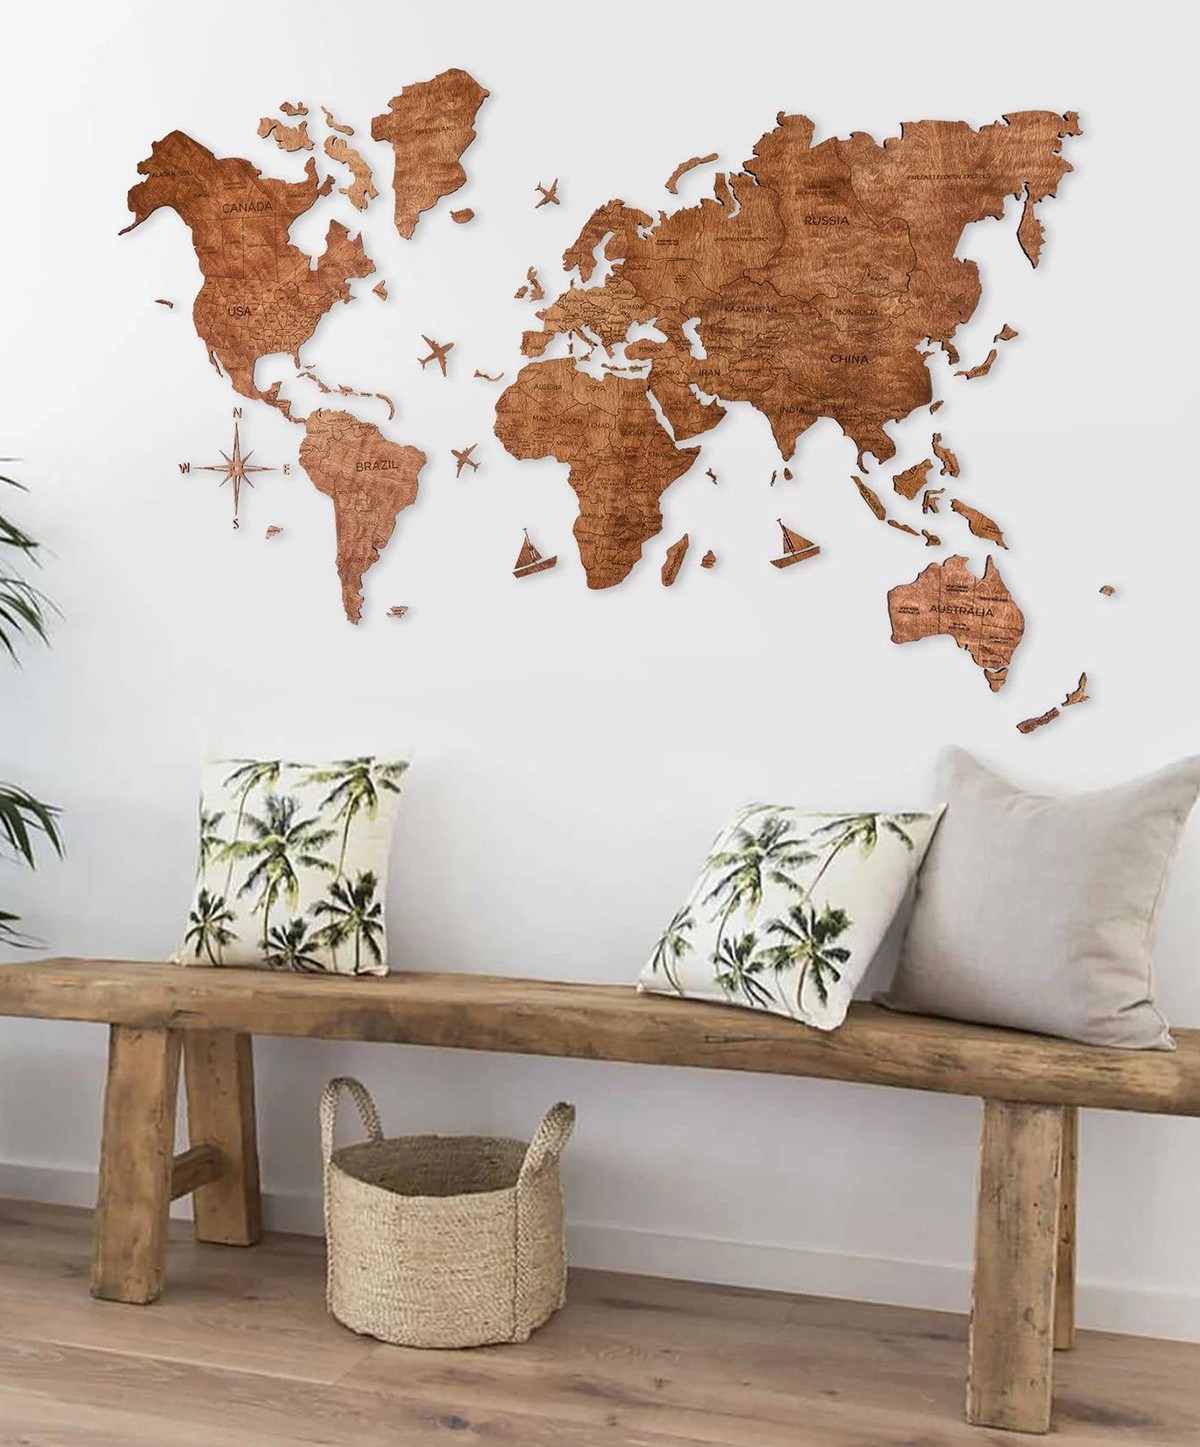 Wall painting of world oak map